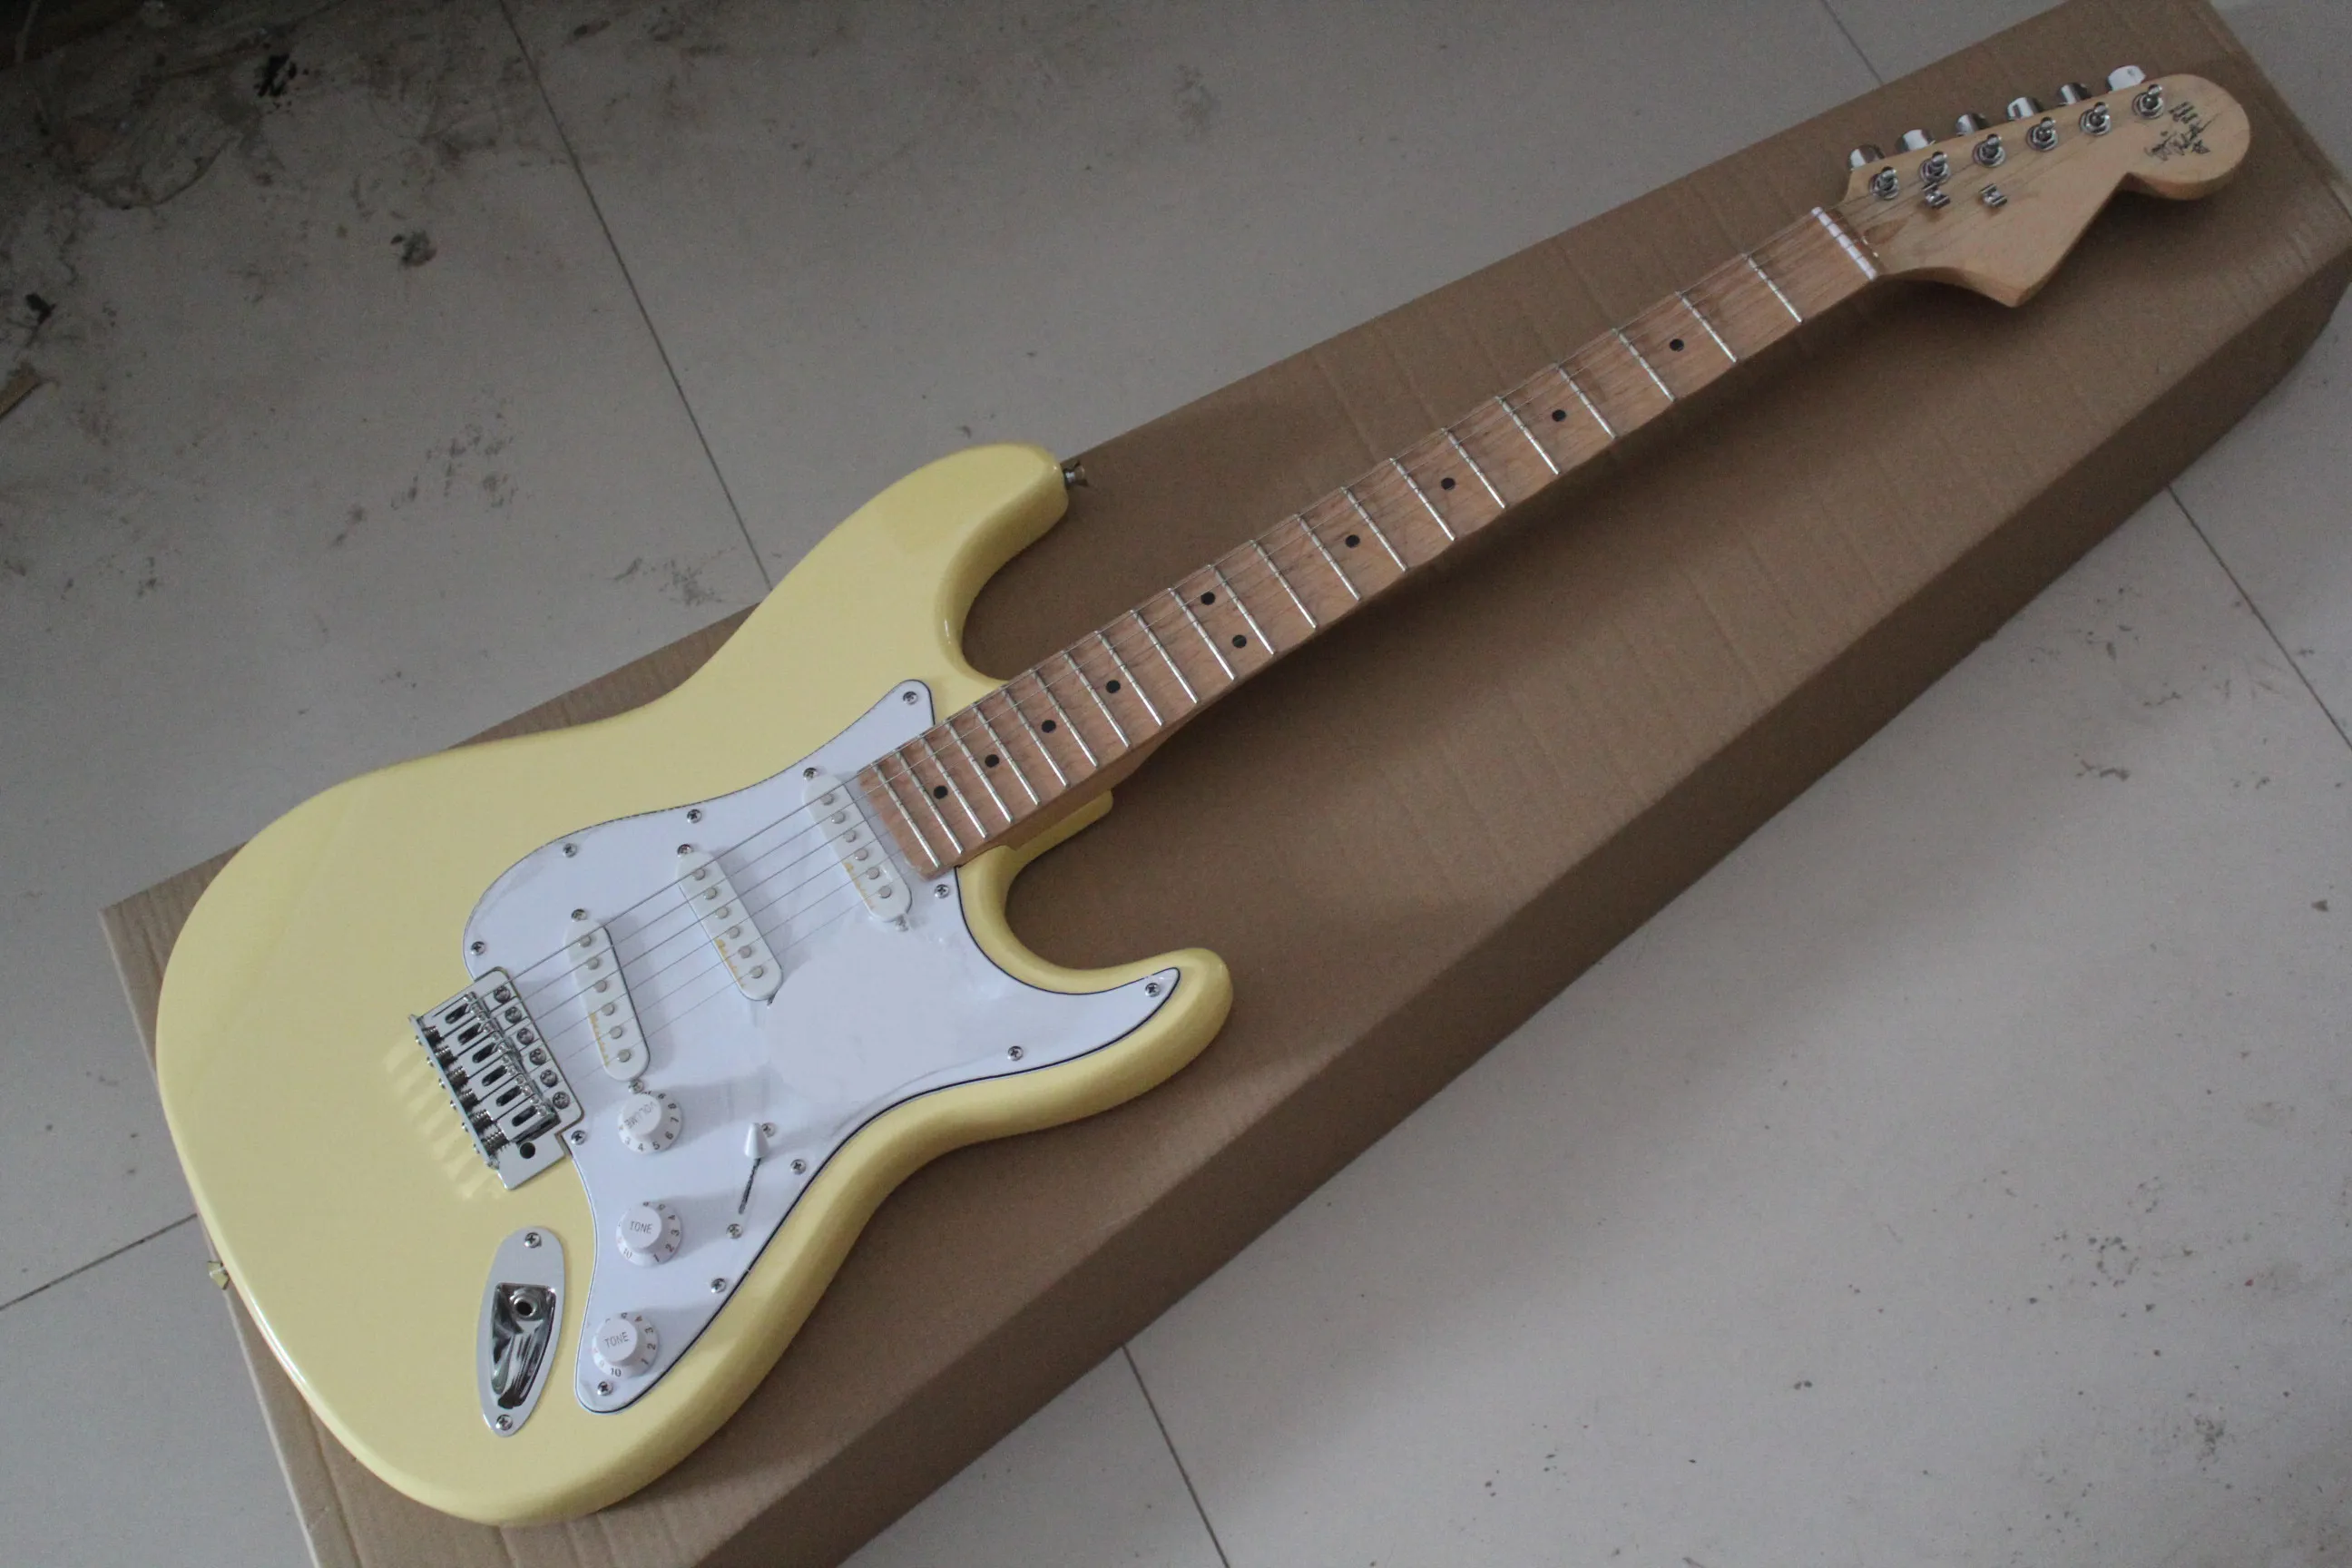 Custom Big Headstock St Gul Cream Yngwie Malmsteen Scalloped Maple Fingerboard 6 String Electric Guitar Guitarra Drop Shipping